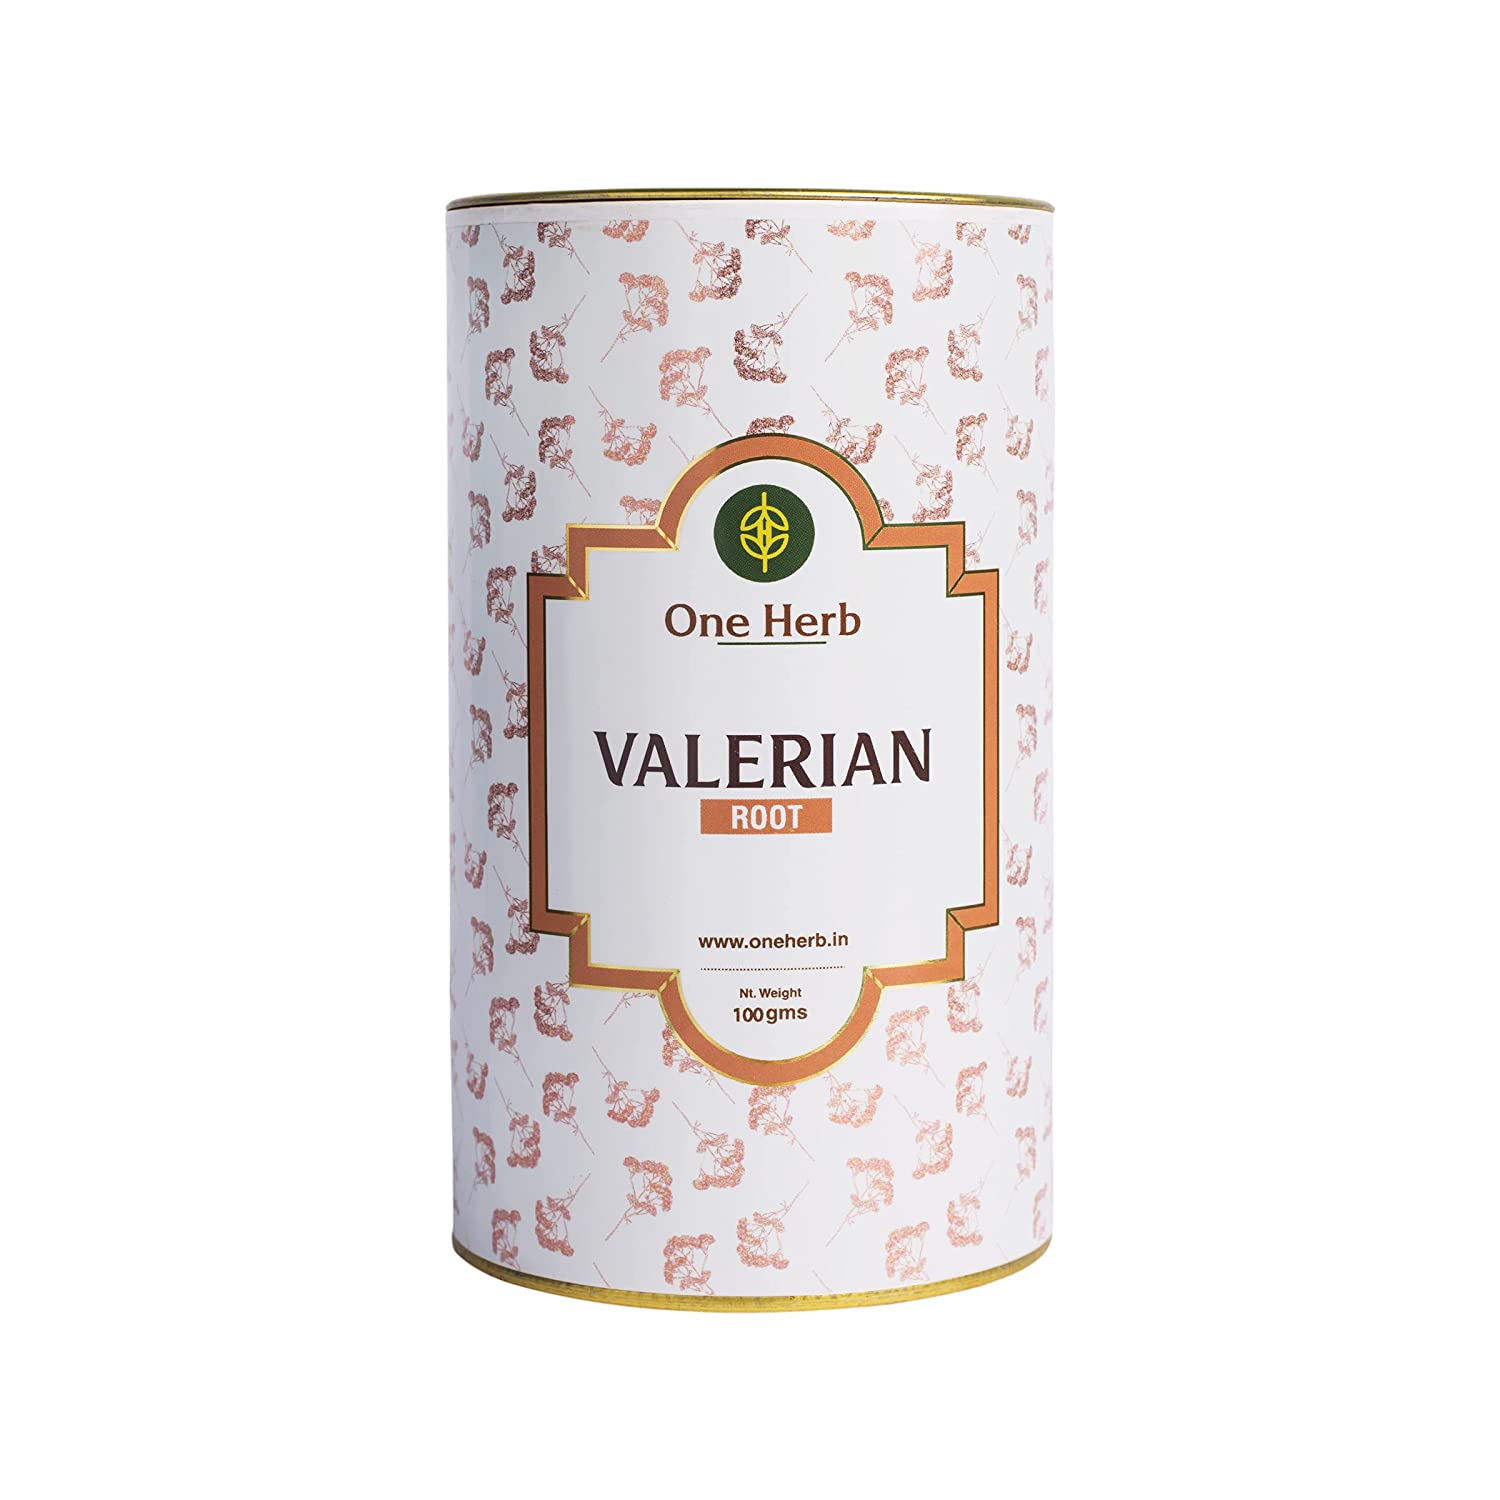 One Herb Valerian Root Tea Image